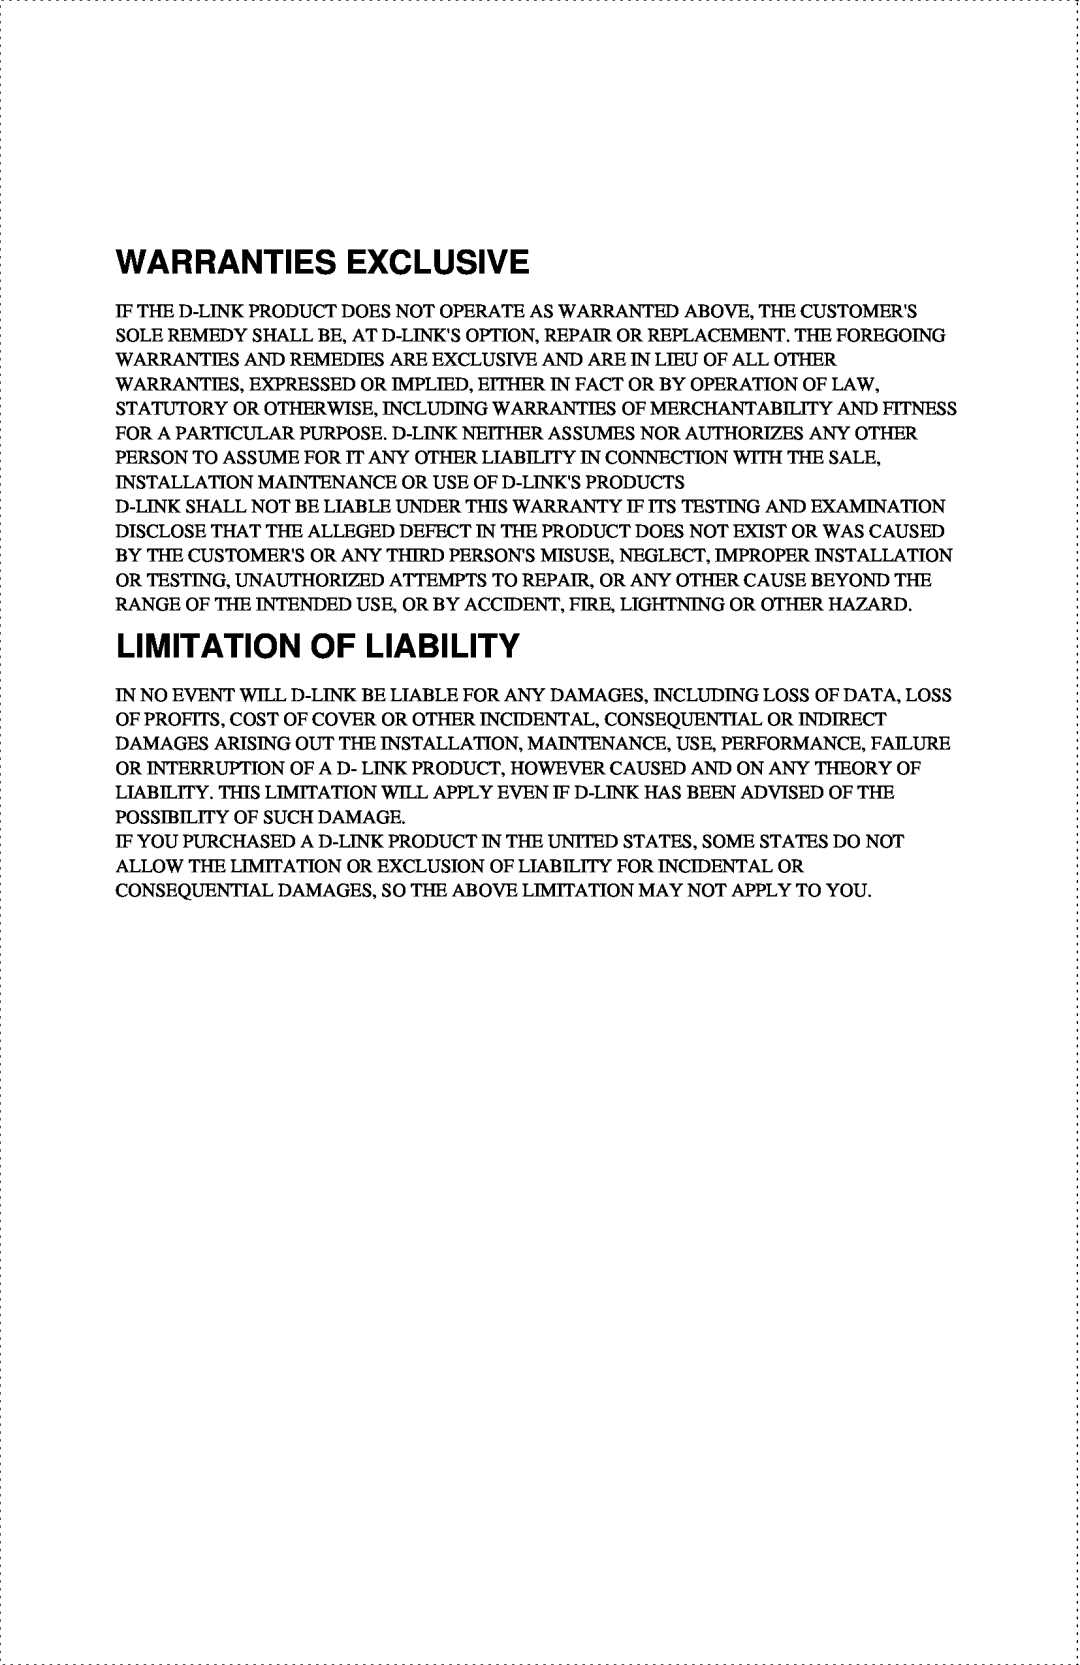 D-Link DES-802 manual Warranties Exclusive, Limitation Of Liability 